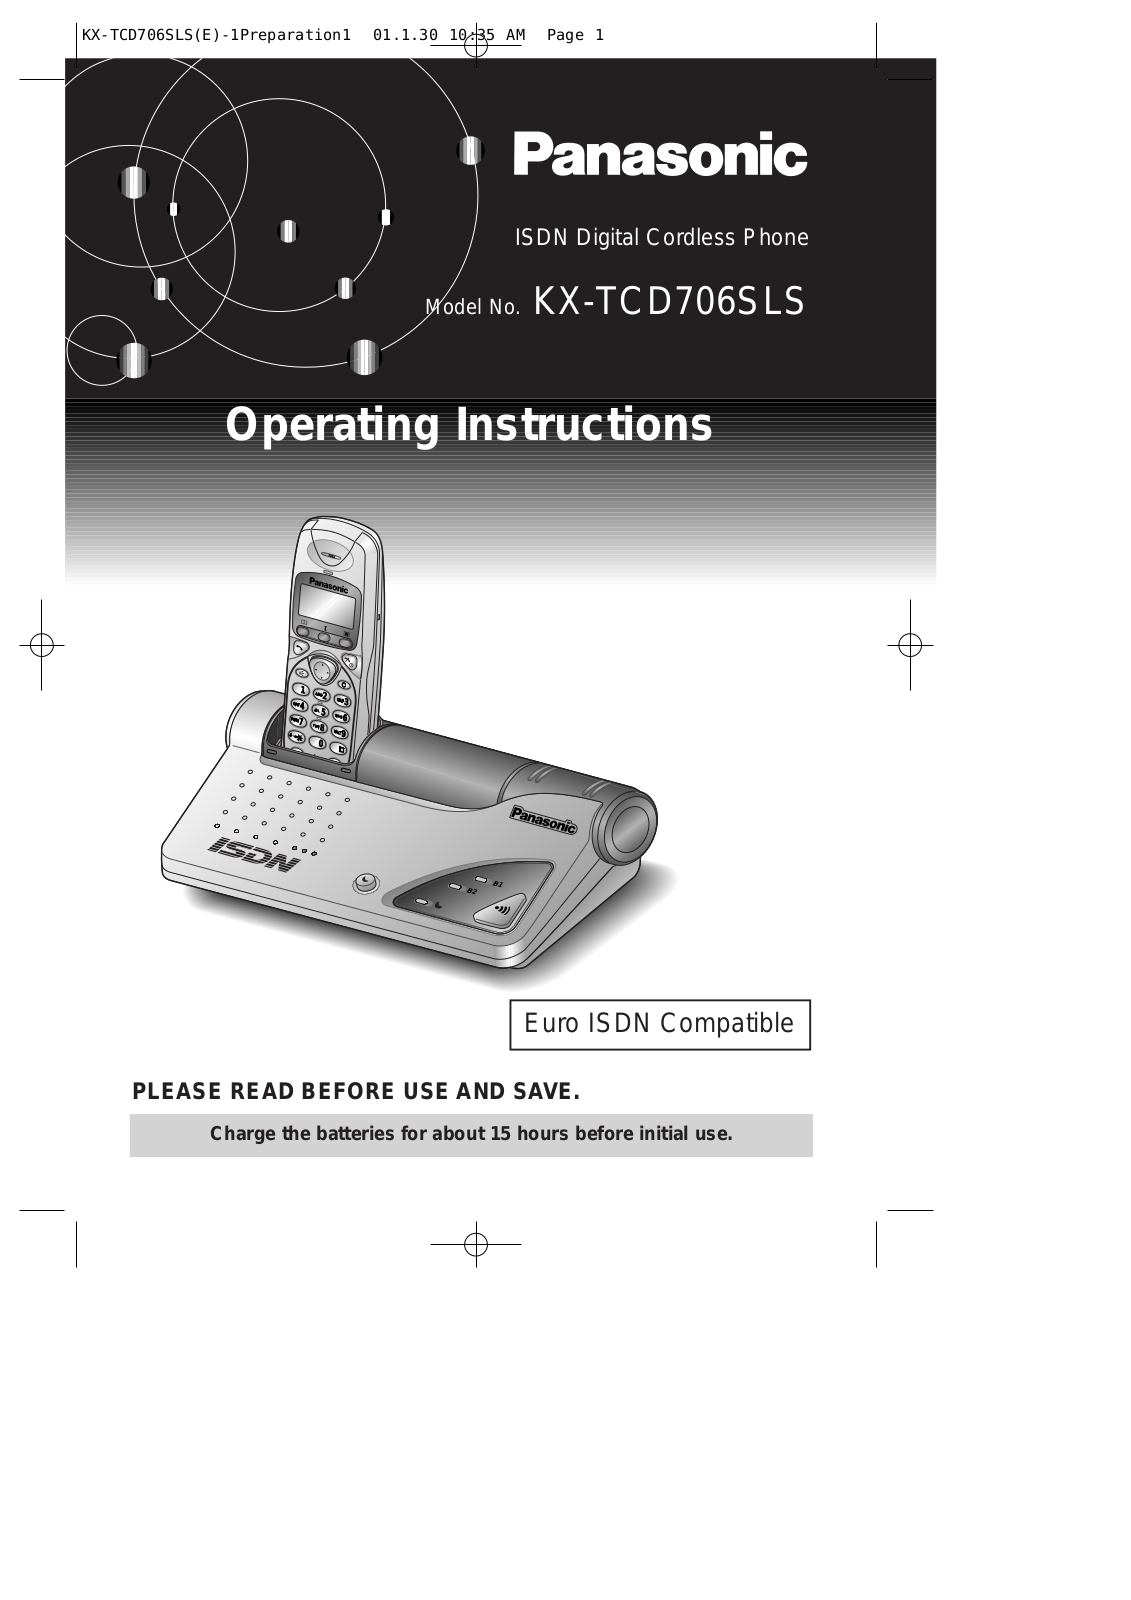 Panasonic KX-TCD706SLS User Manual